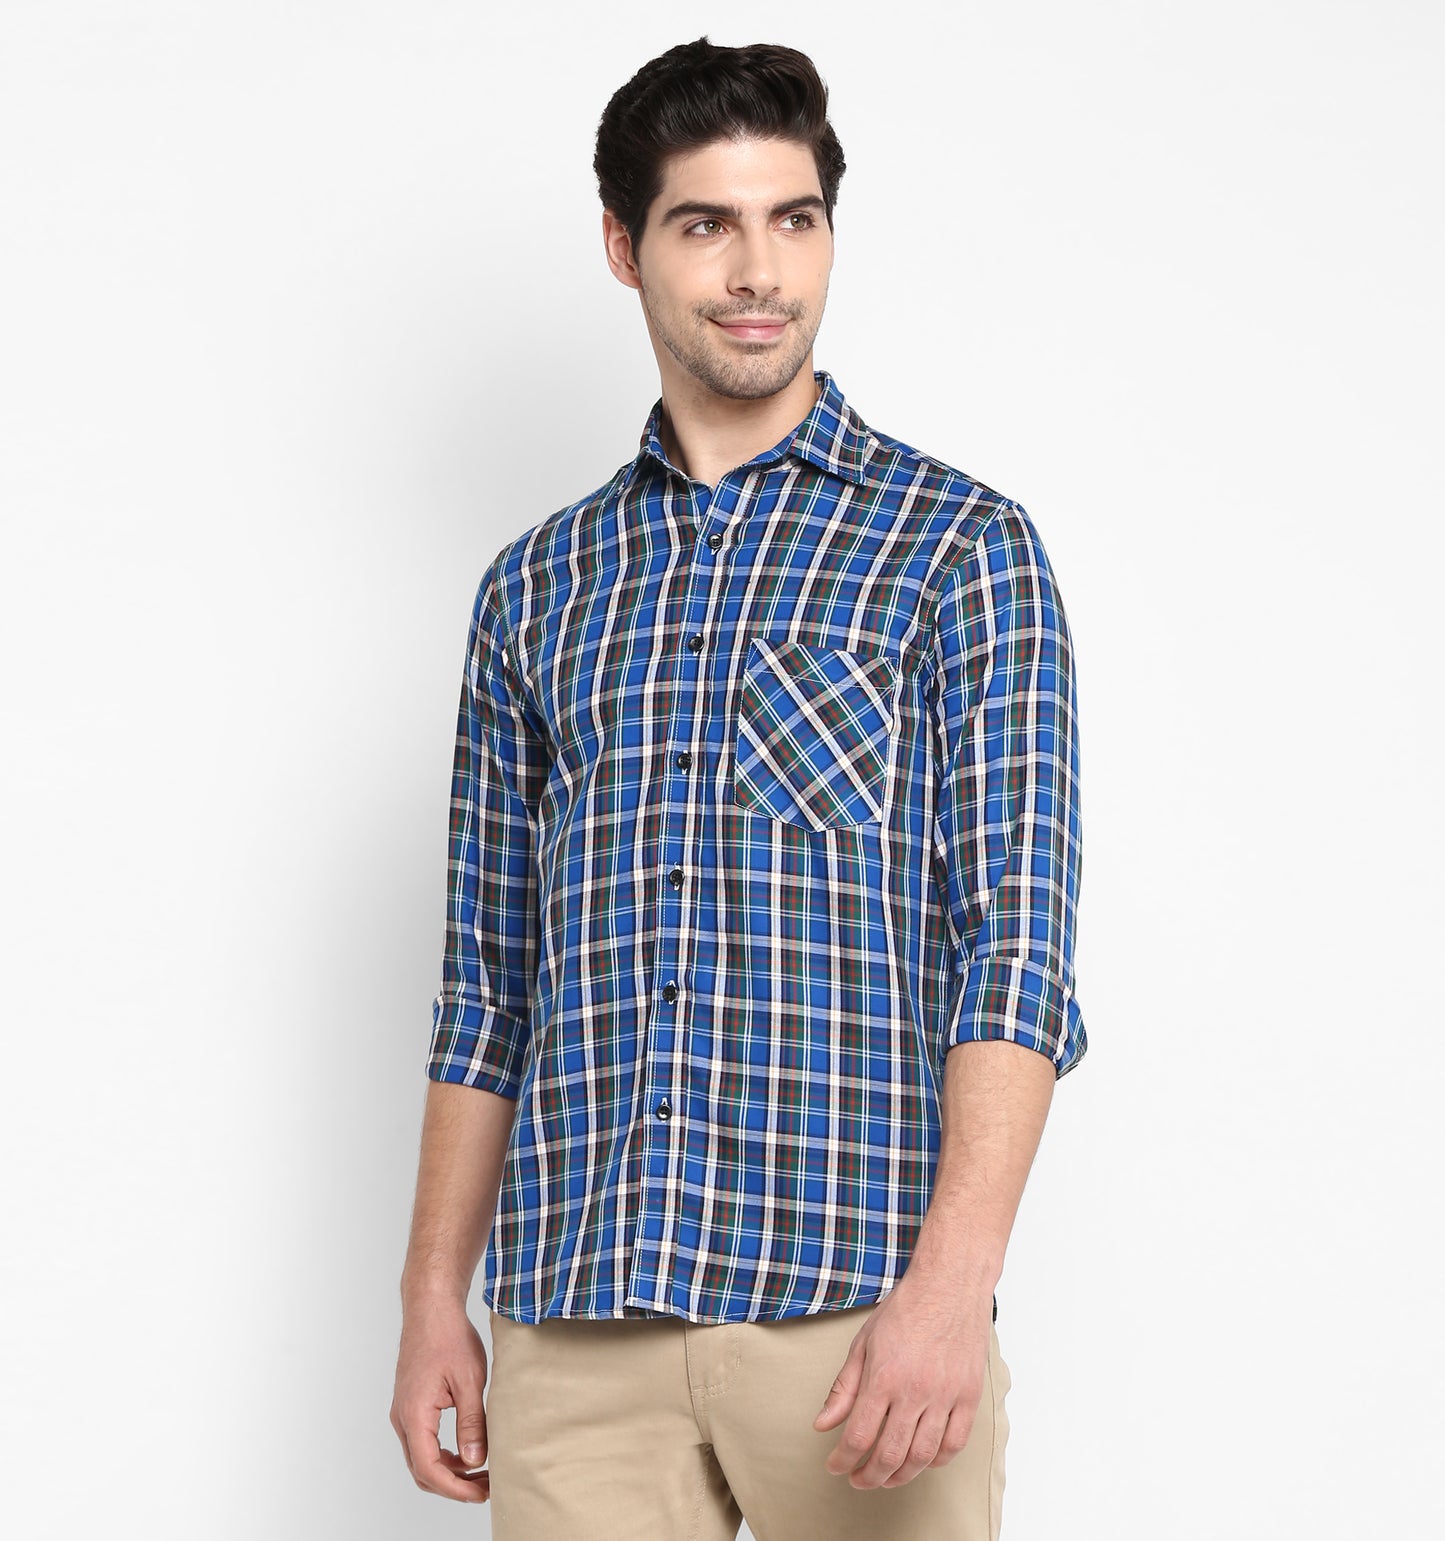 Murano Checks shirt